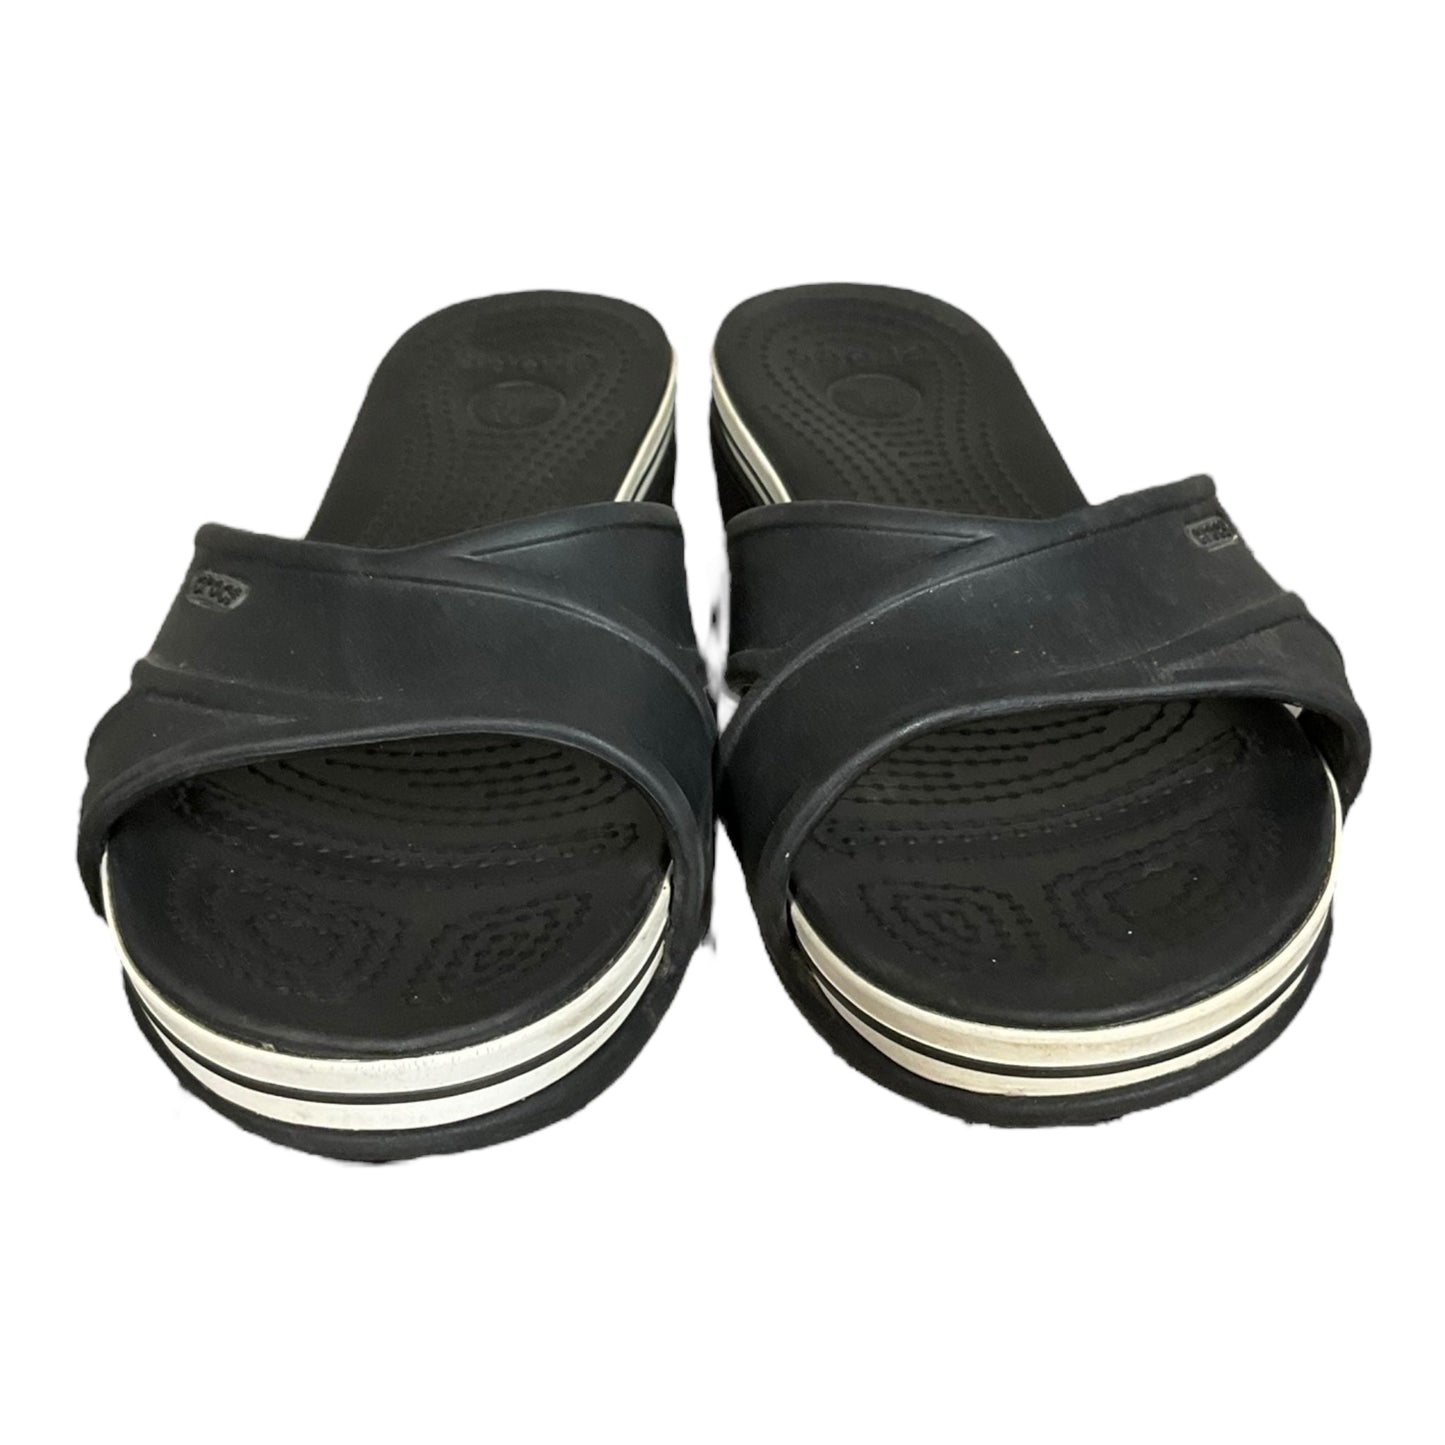 Black Shoes Flats Crocs, Size 8